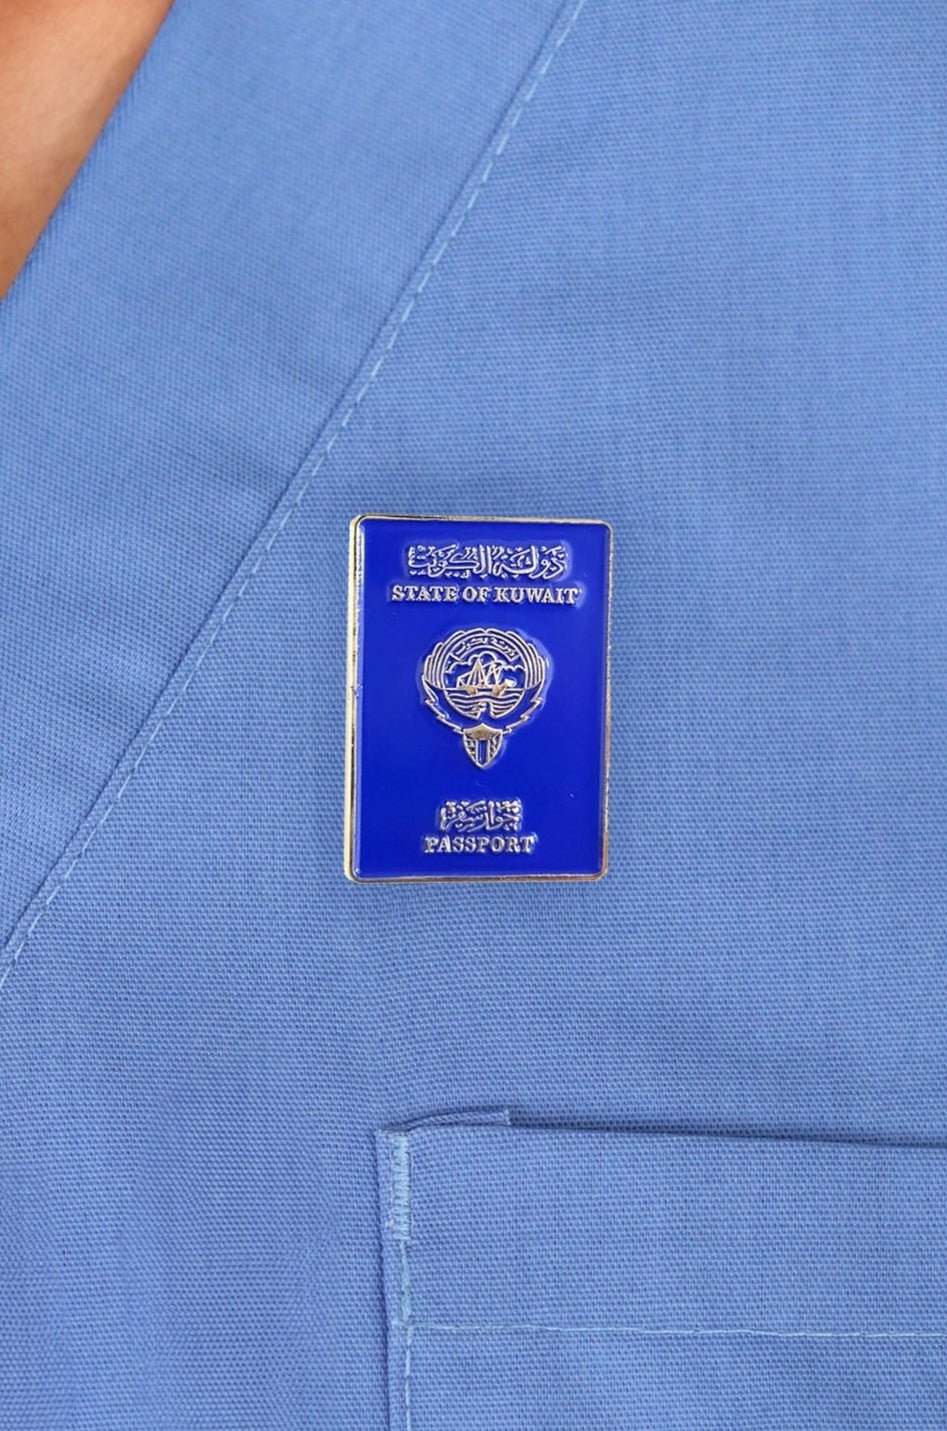 Kuwait Passport Pin